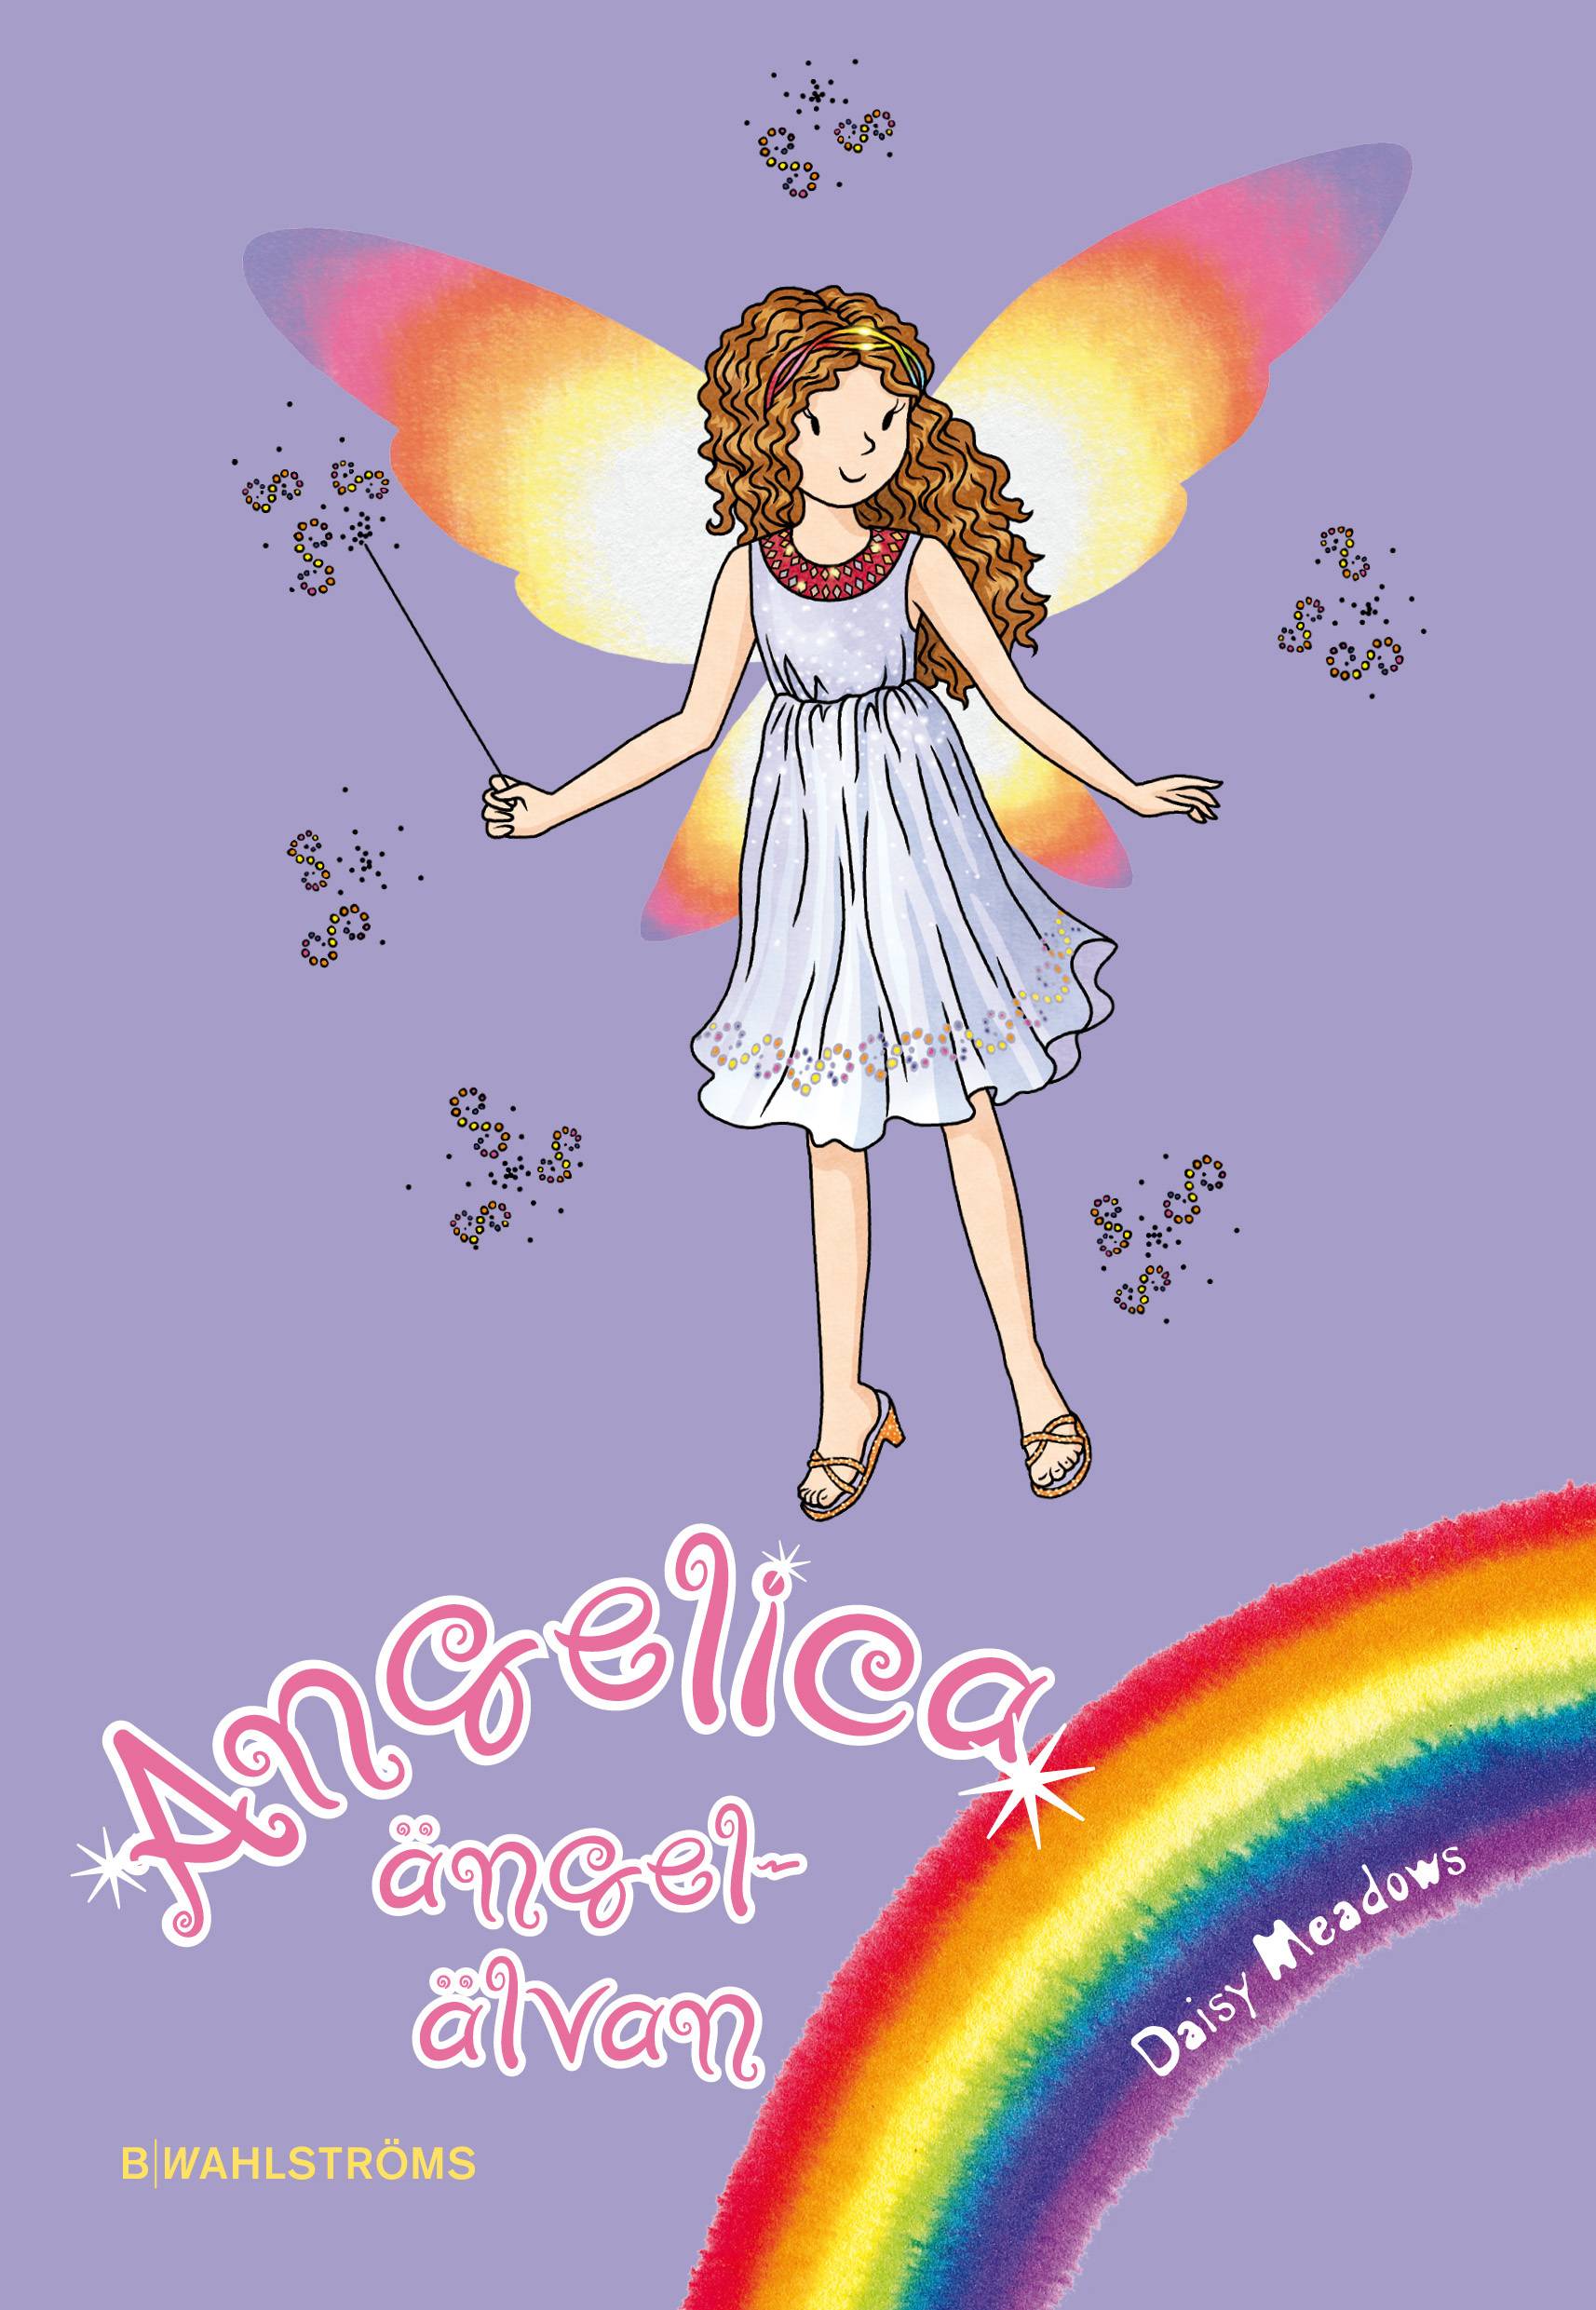 Angelica ängelälvan